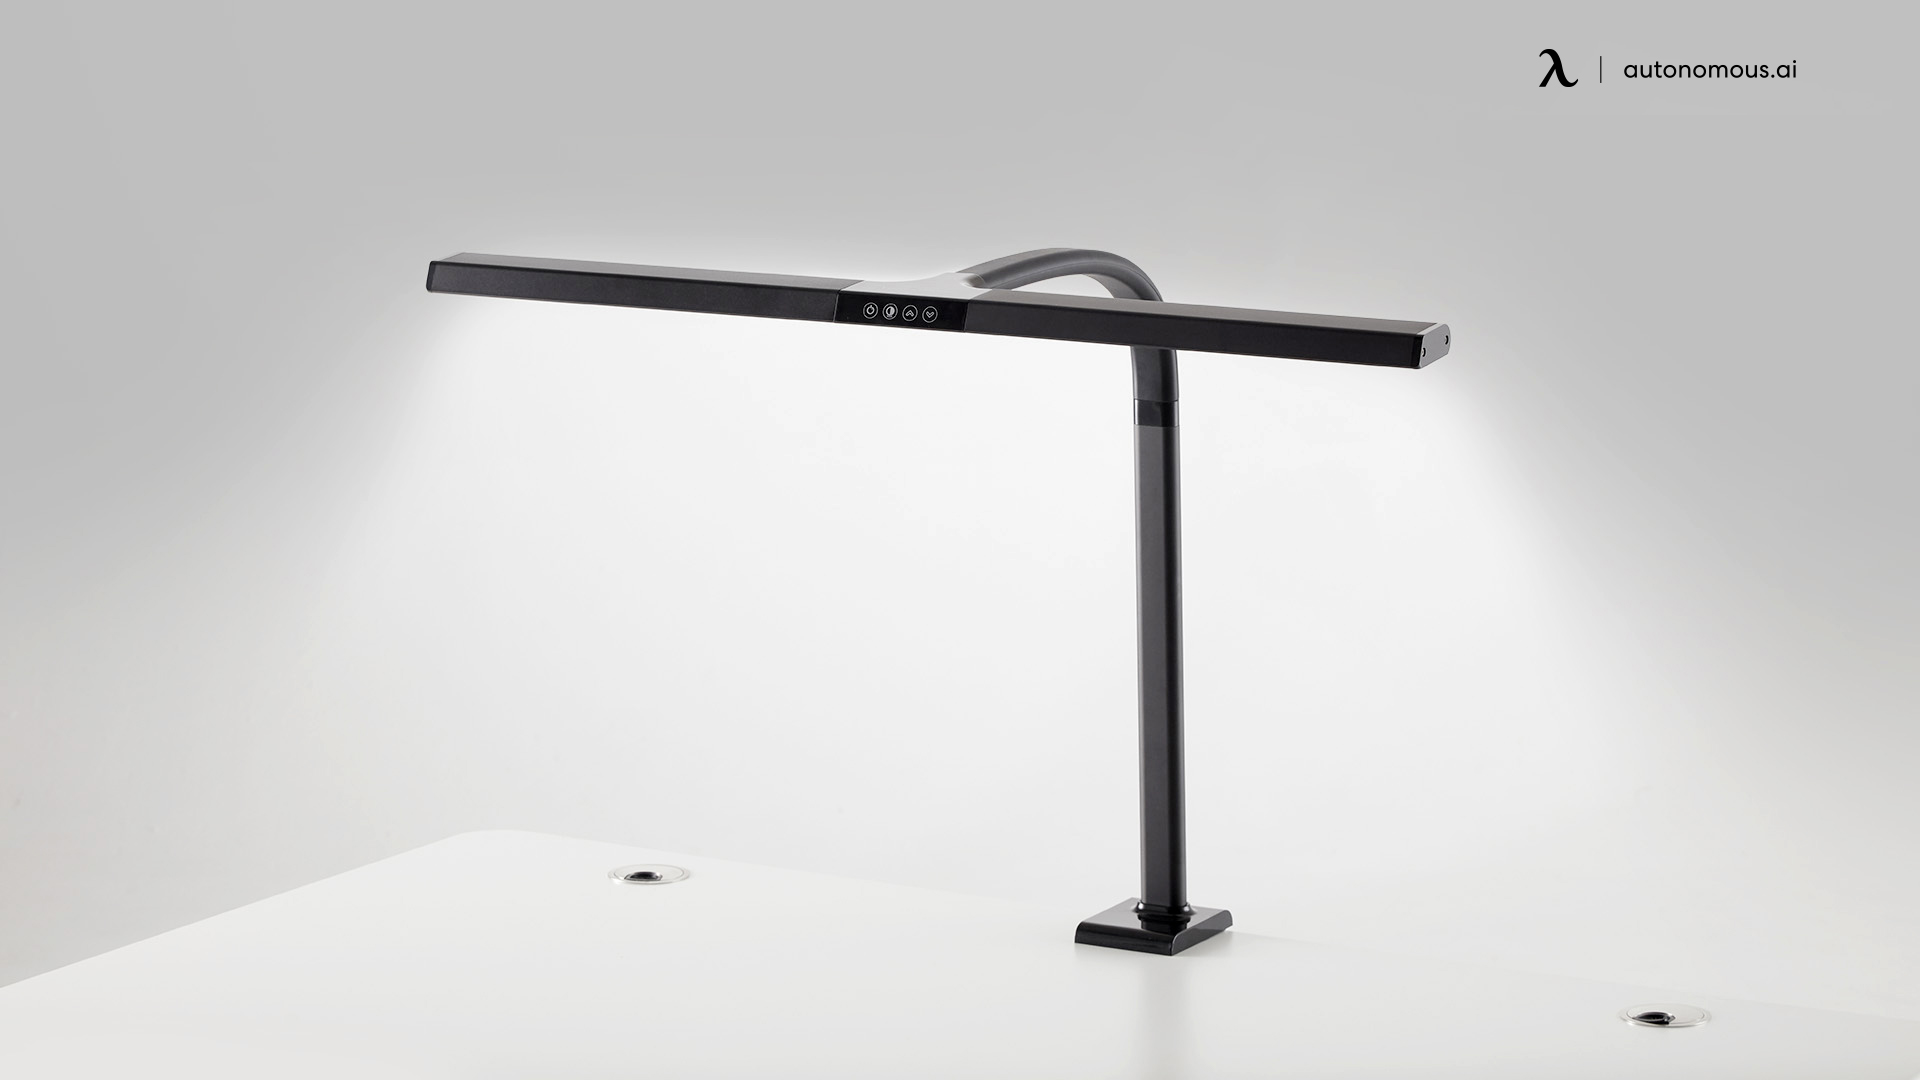 Desk Lamp in apple employee discount